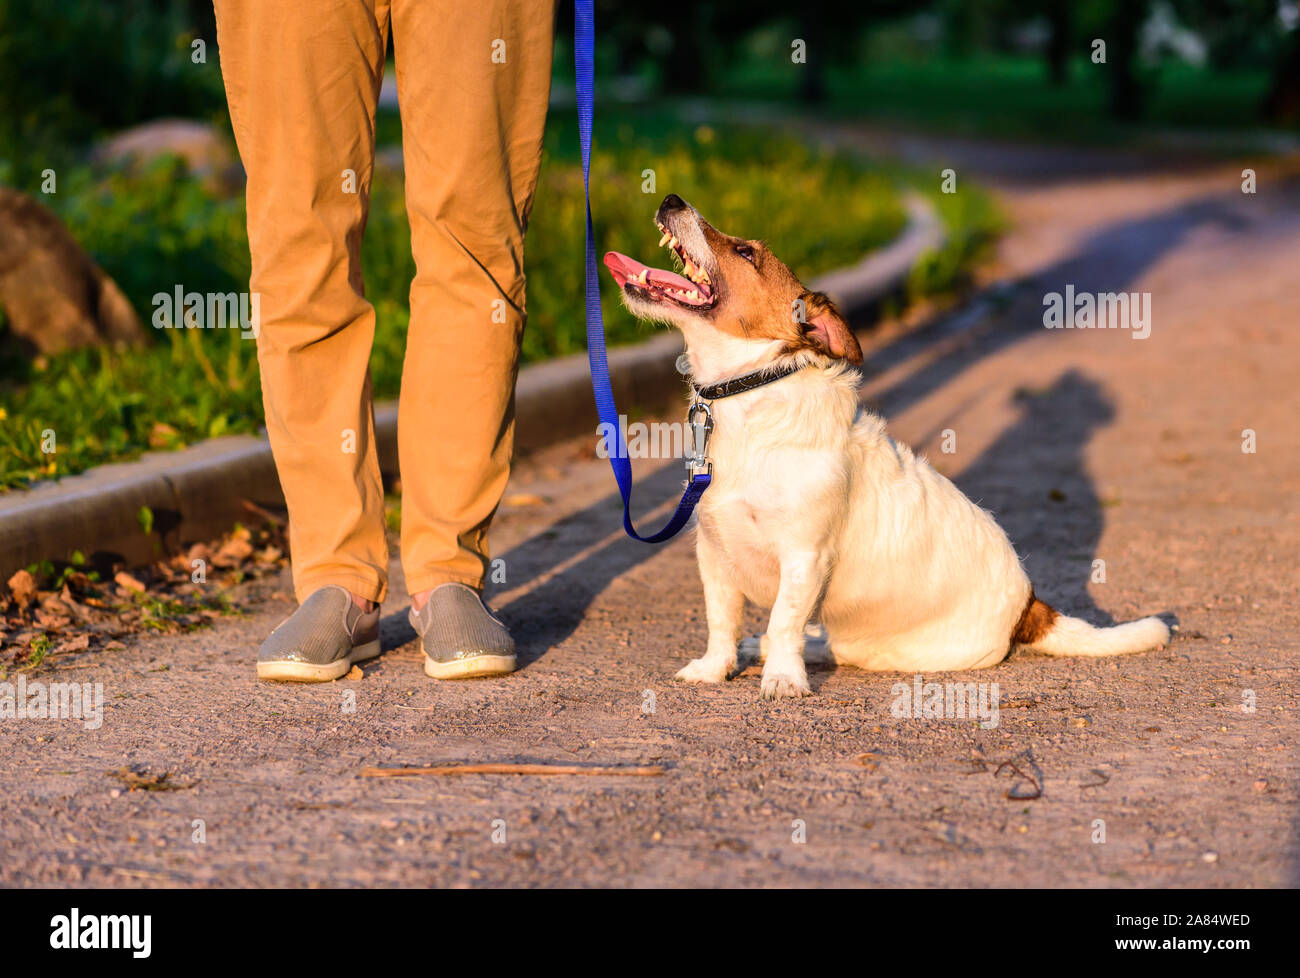 Dog walker exercising dog during evening walk in park Stock Photo